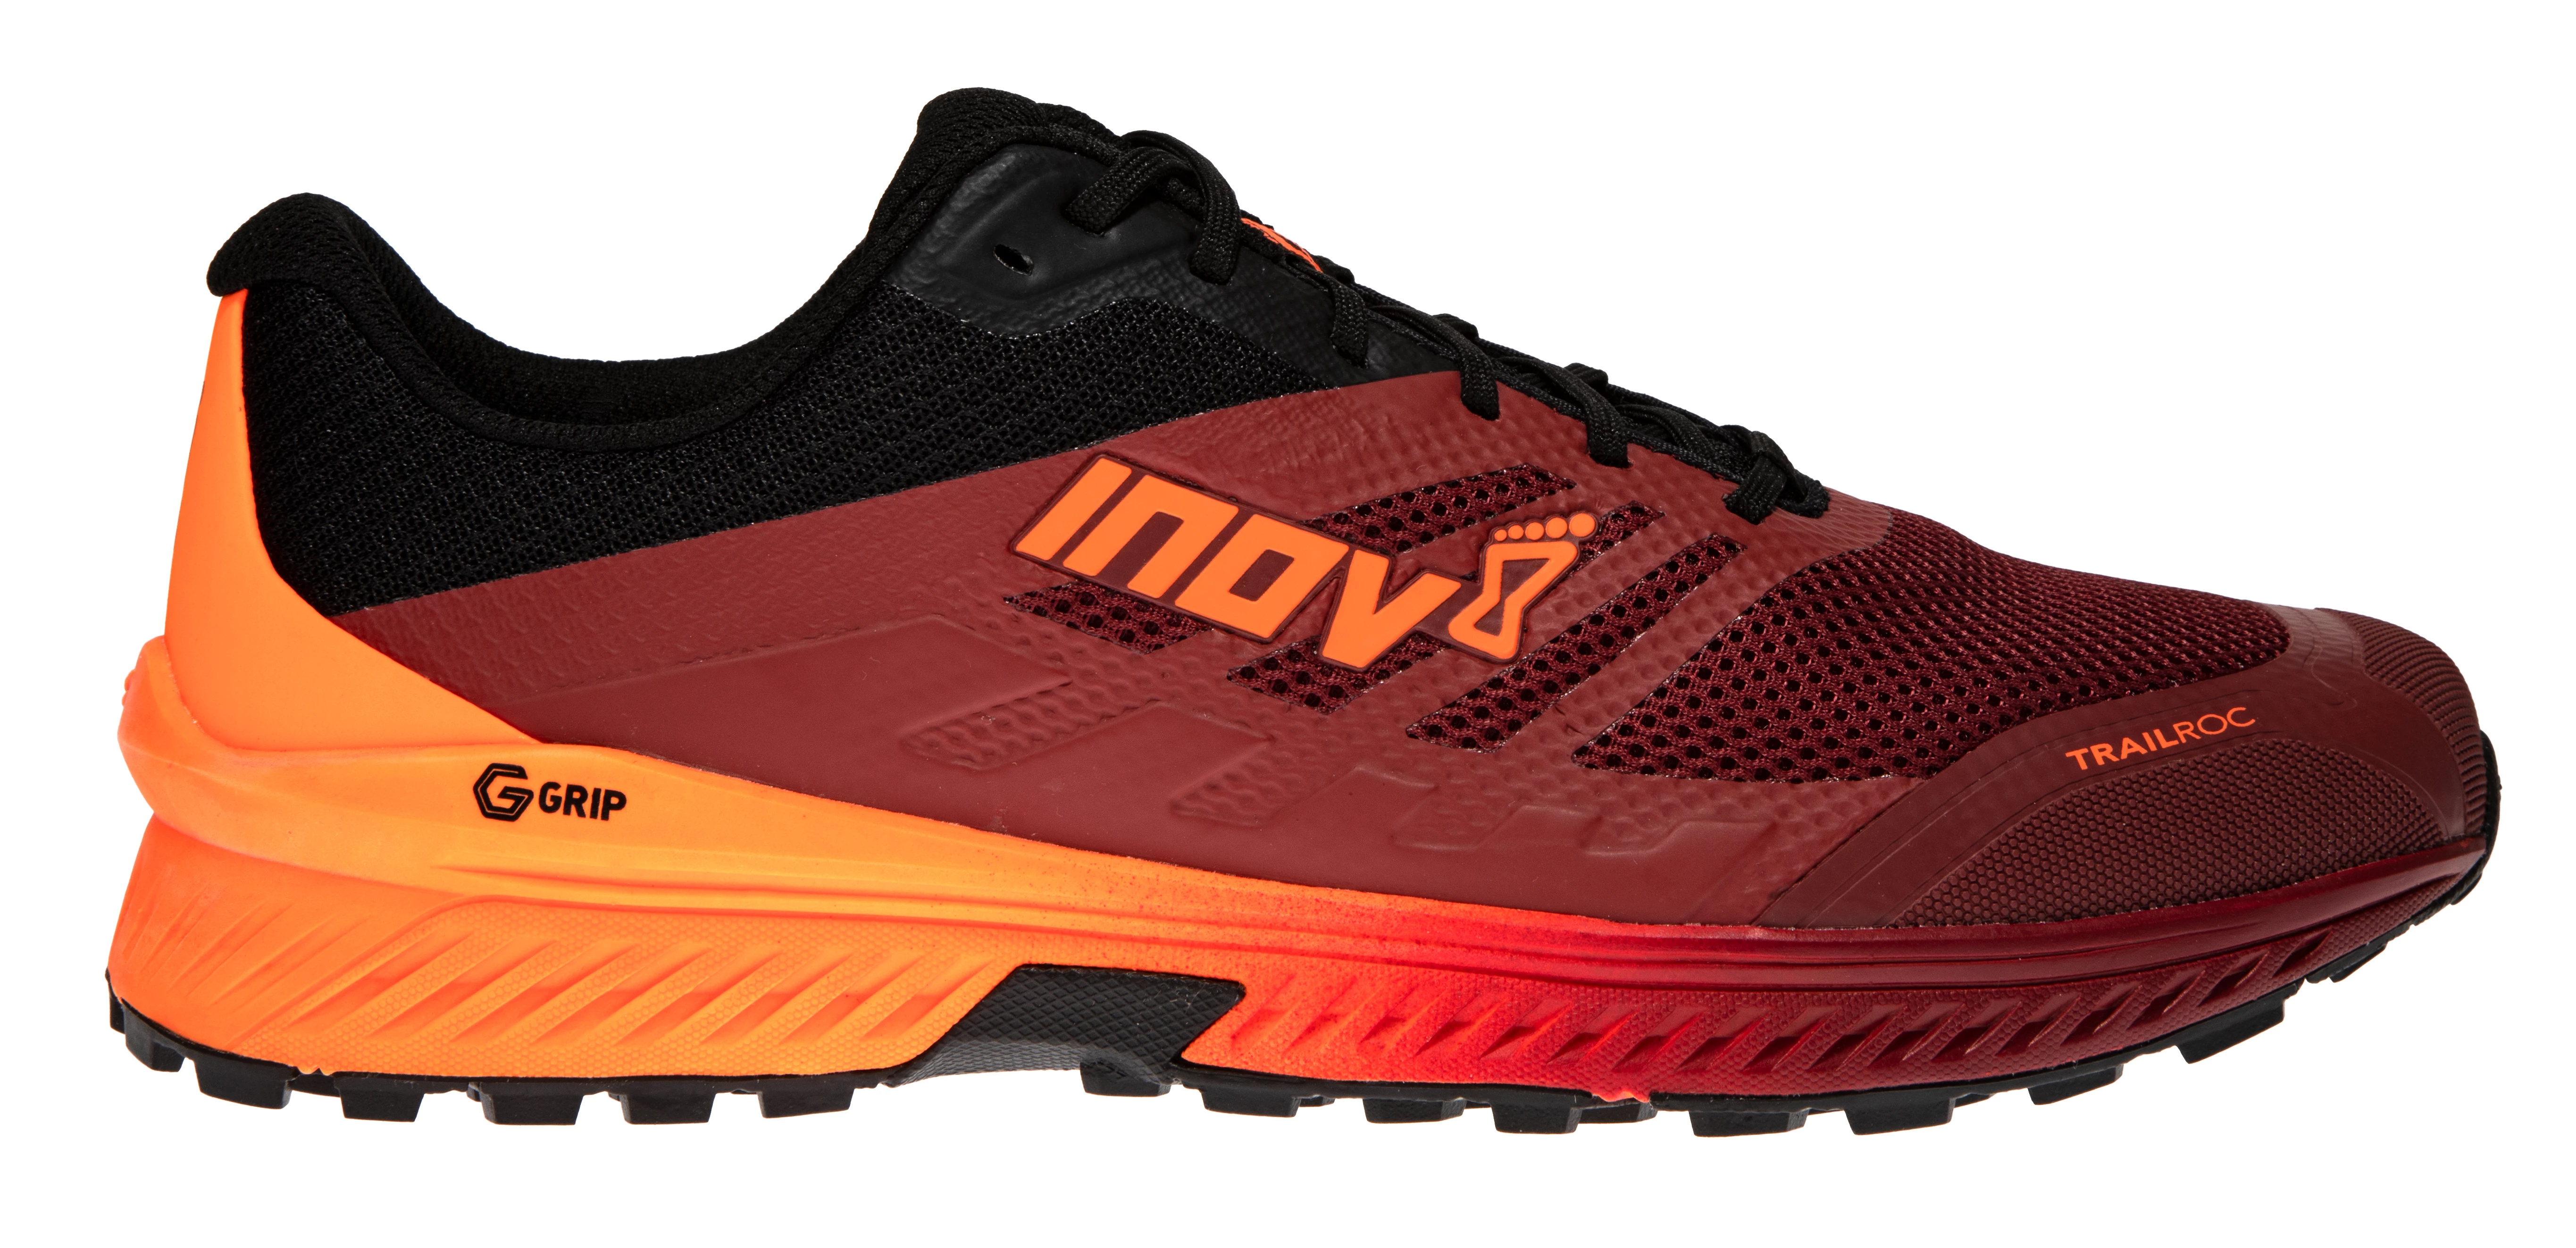 Inov-8 Trailroc G 280 Men's Running Shoes - Red, UK 10.5